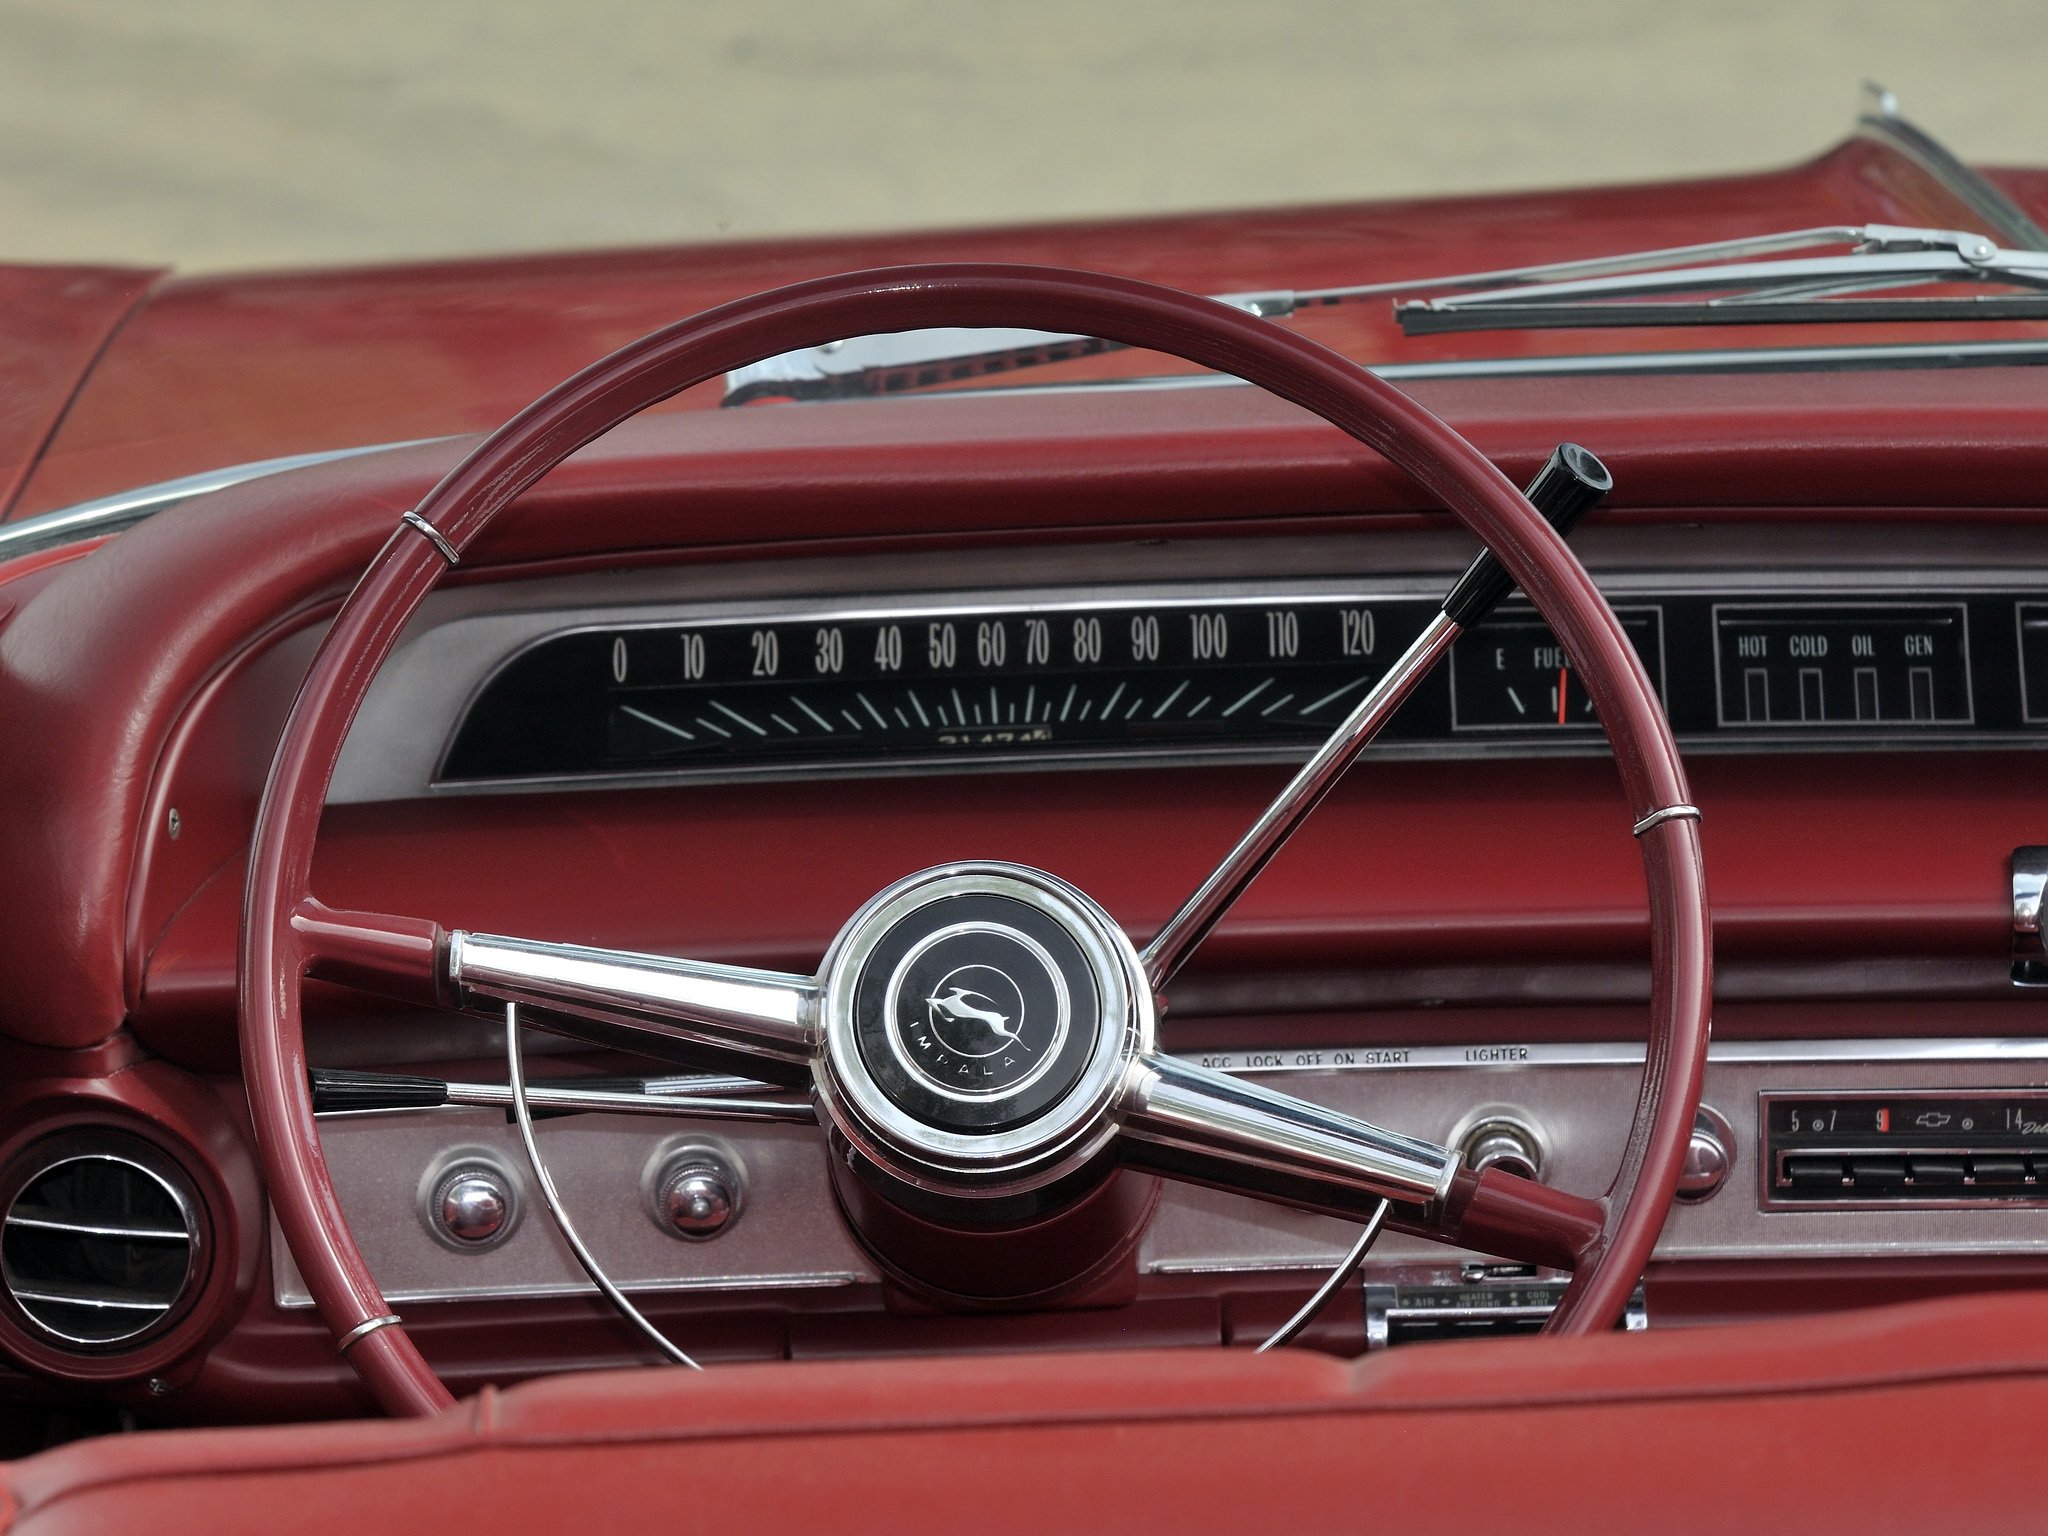 1964 impala 4 interior doors kit